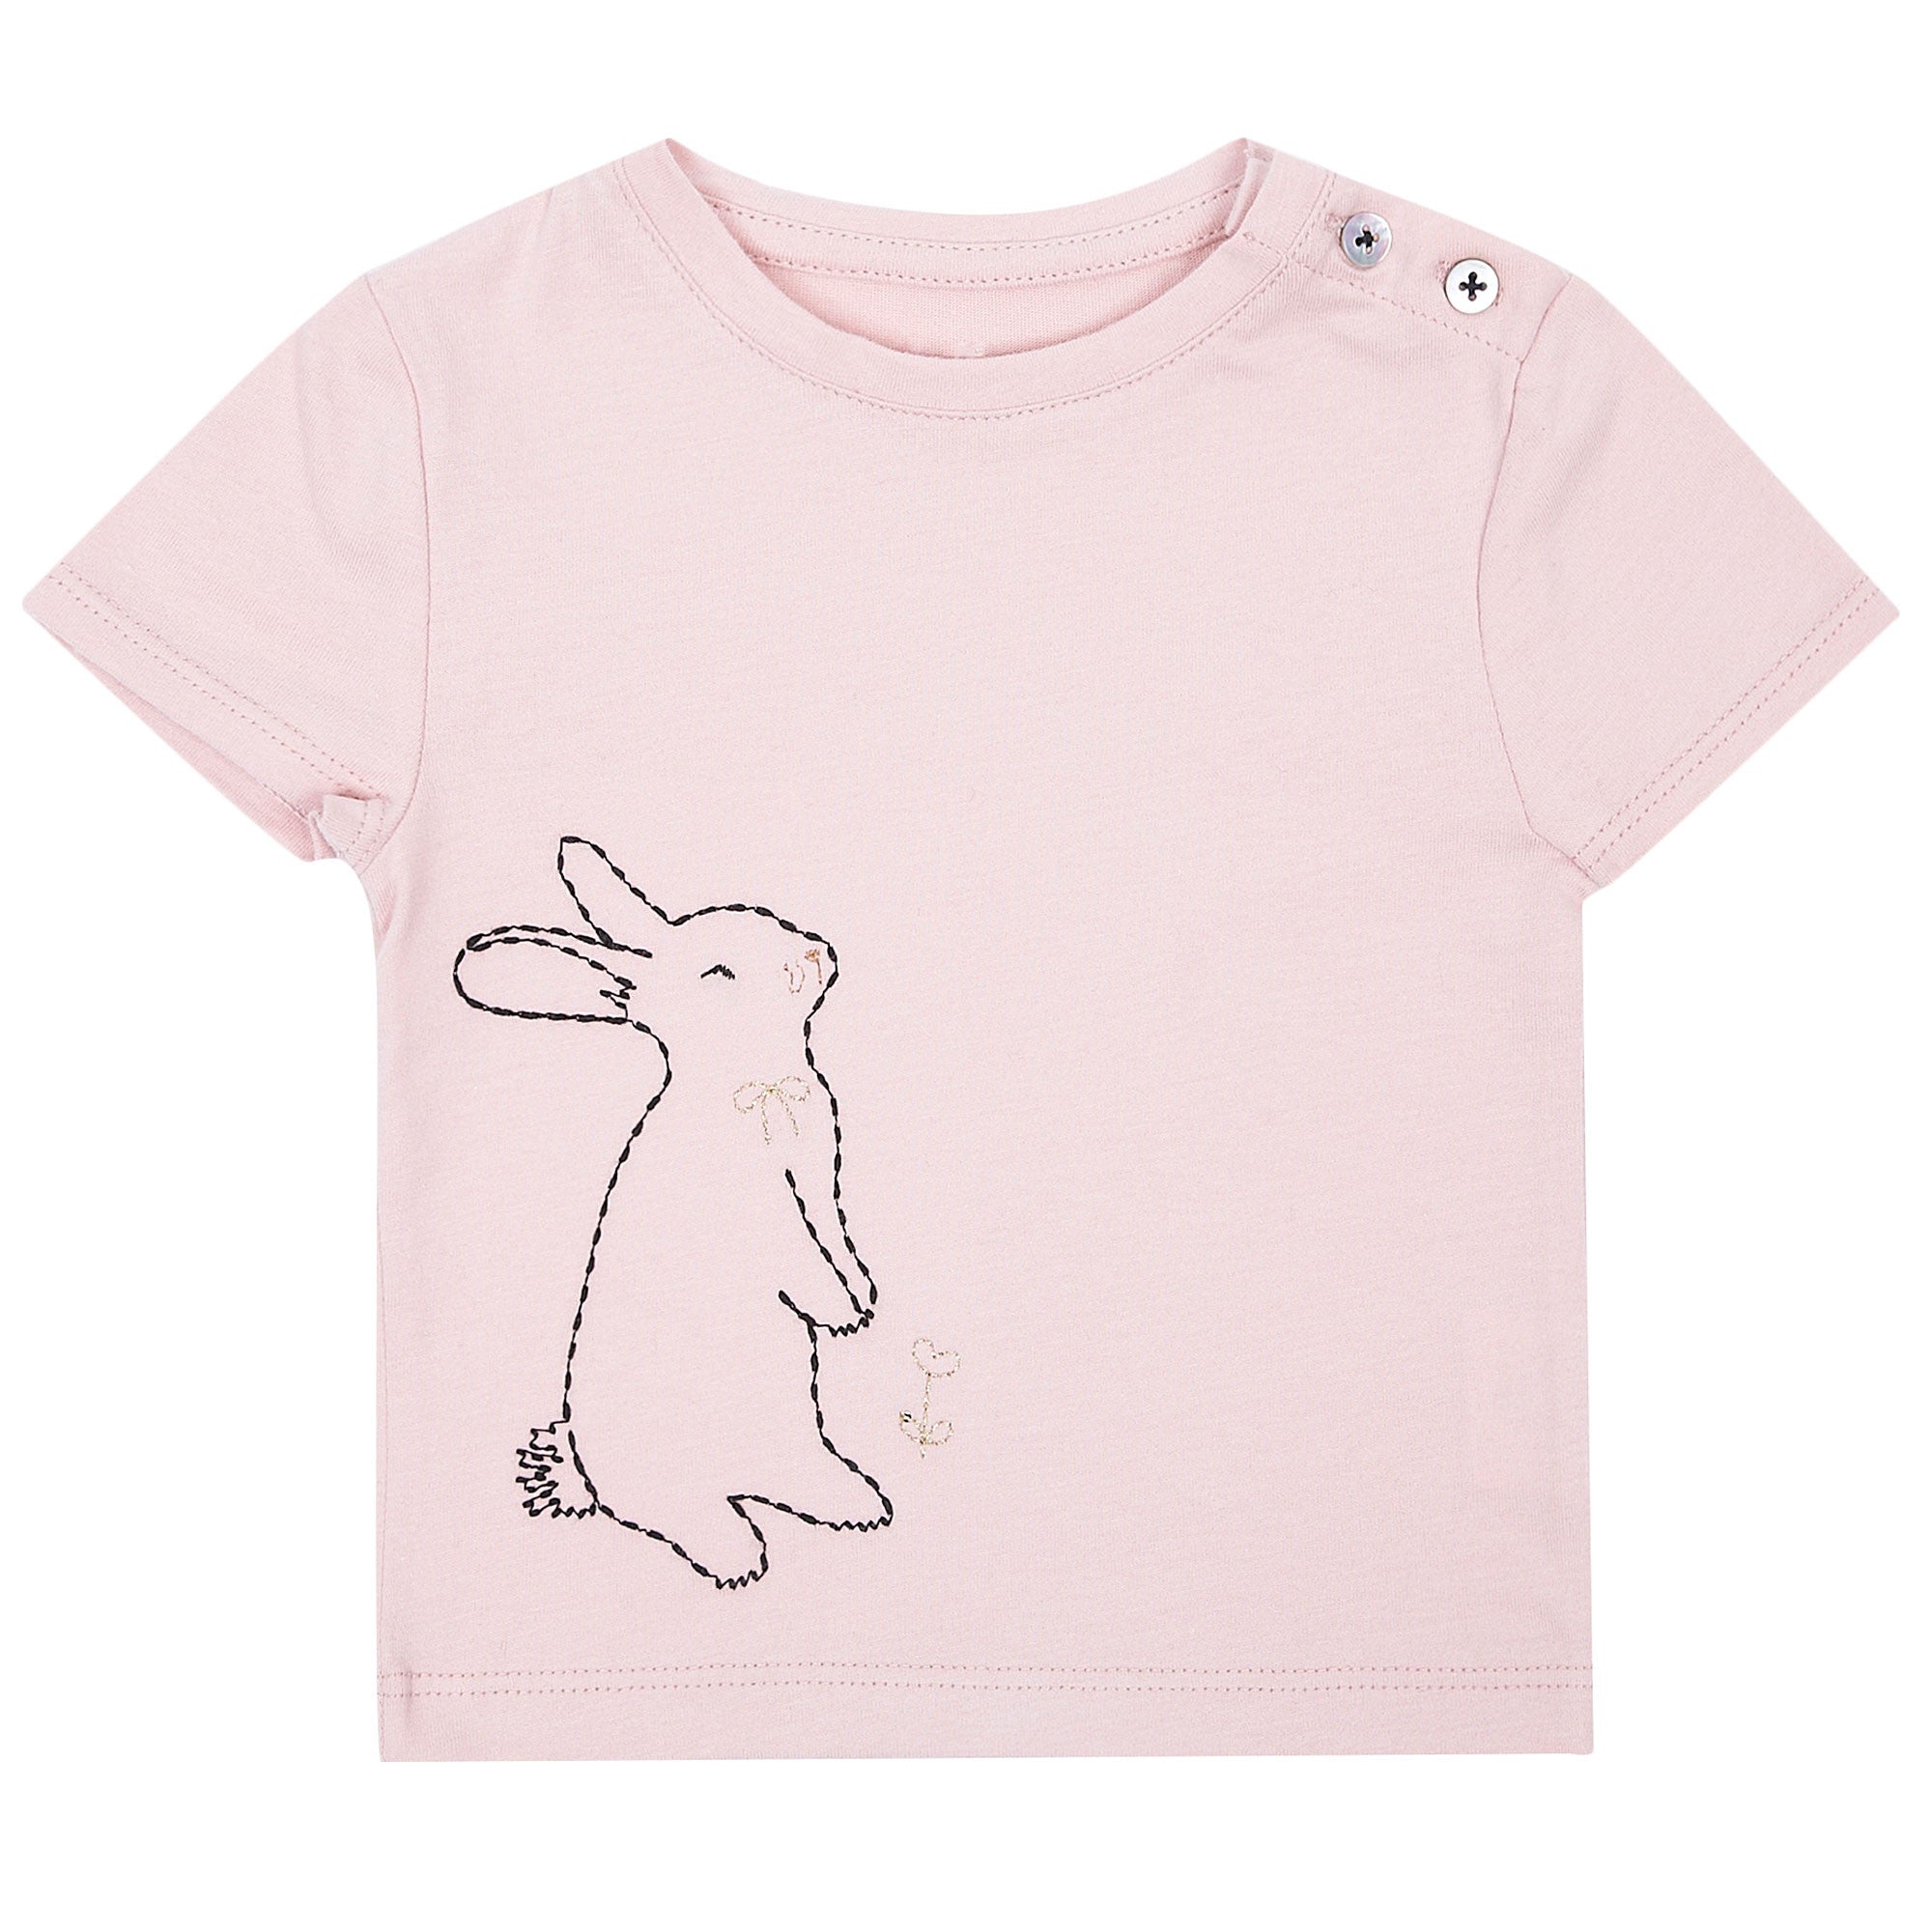 Baby Girls White Cotton T-shirt With Rabbit